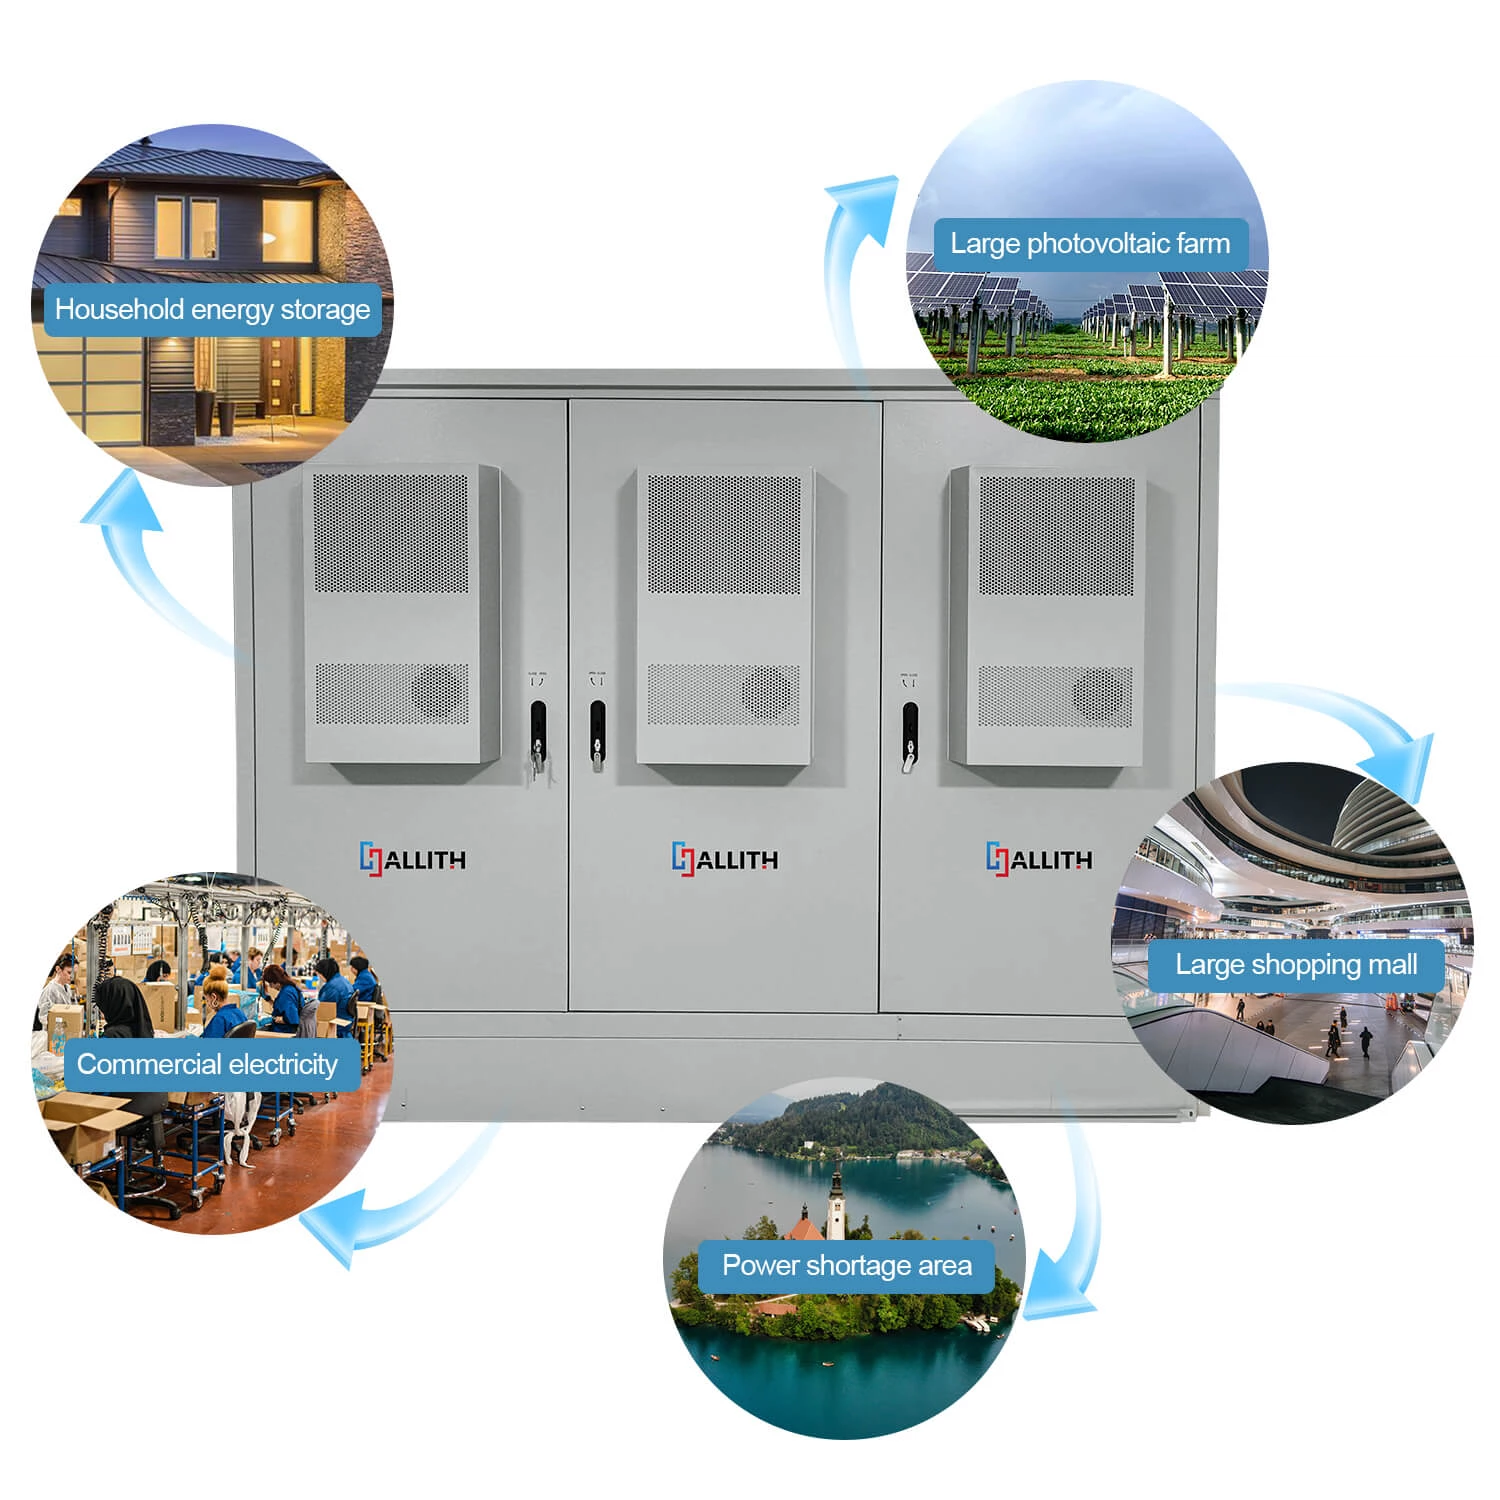 528V 206AH Outdoor Energy Storage Cabinet